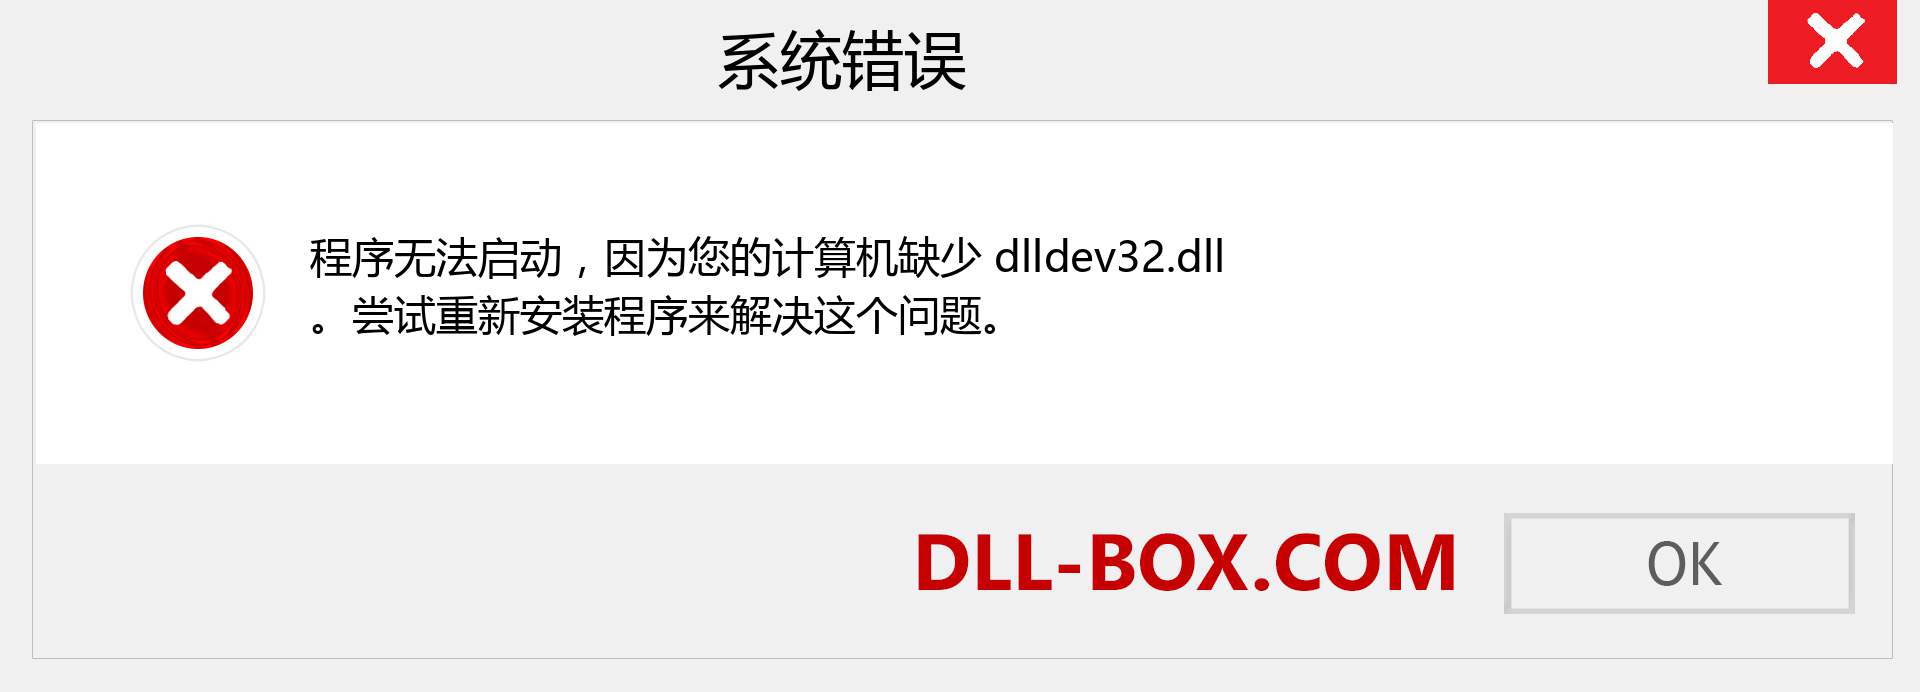 dlldev32.dll 文件丢失？。 适用于 Windows 7、8、10 的下载 - 修复 Windows、照片、图像上的 dlldev32 dll 丢失错误